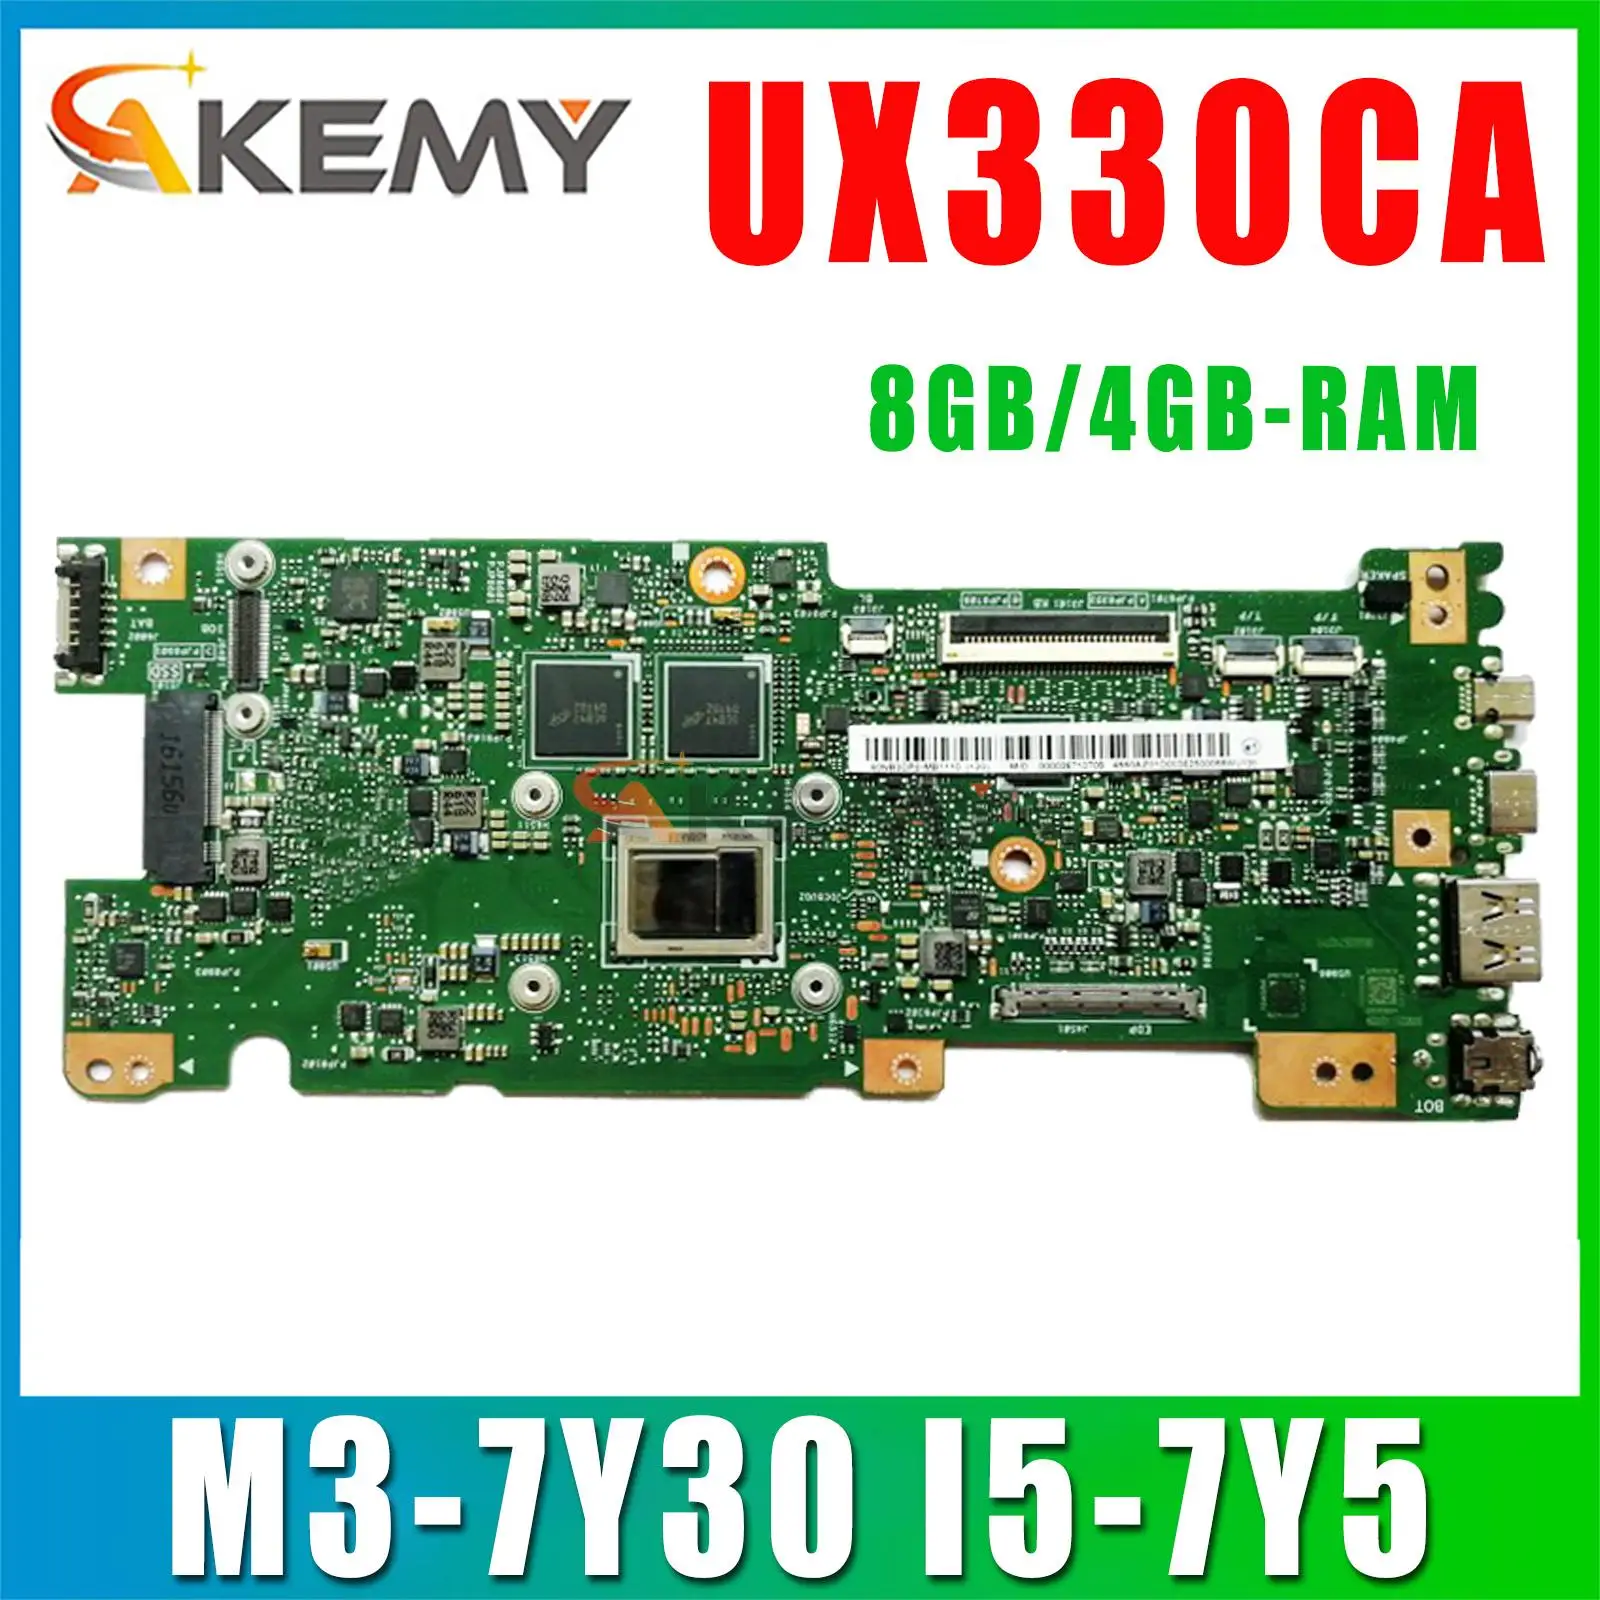 

UX330CA Mainboard For ASUS U330C UX330 UX330C UX330CAK Laptop Motherboard With M3-7Y30 I5-7Y54 8GB/4GB-RAM MAIN BOARD